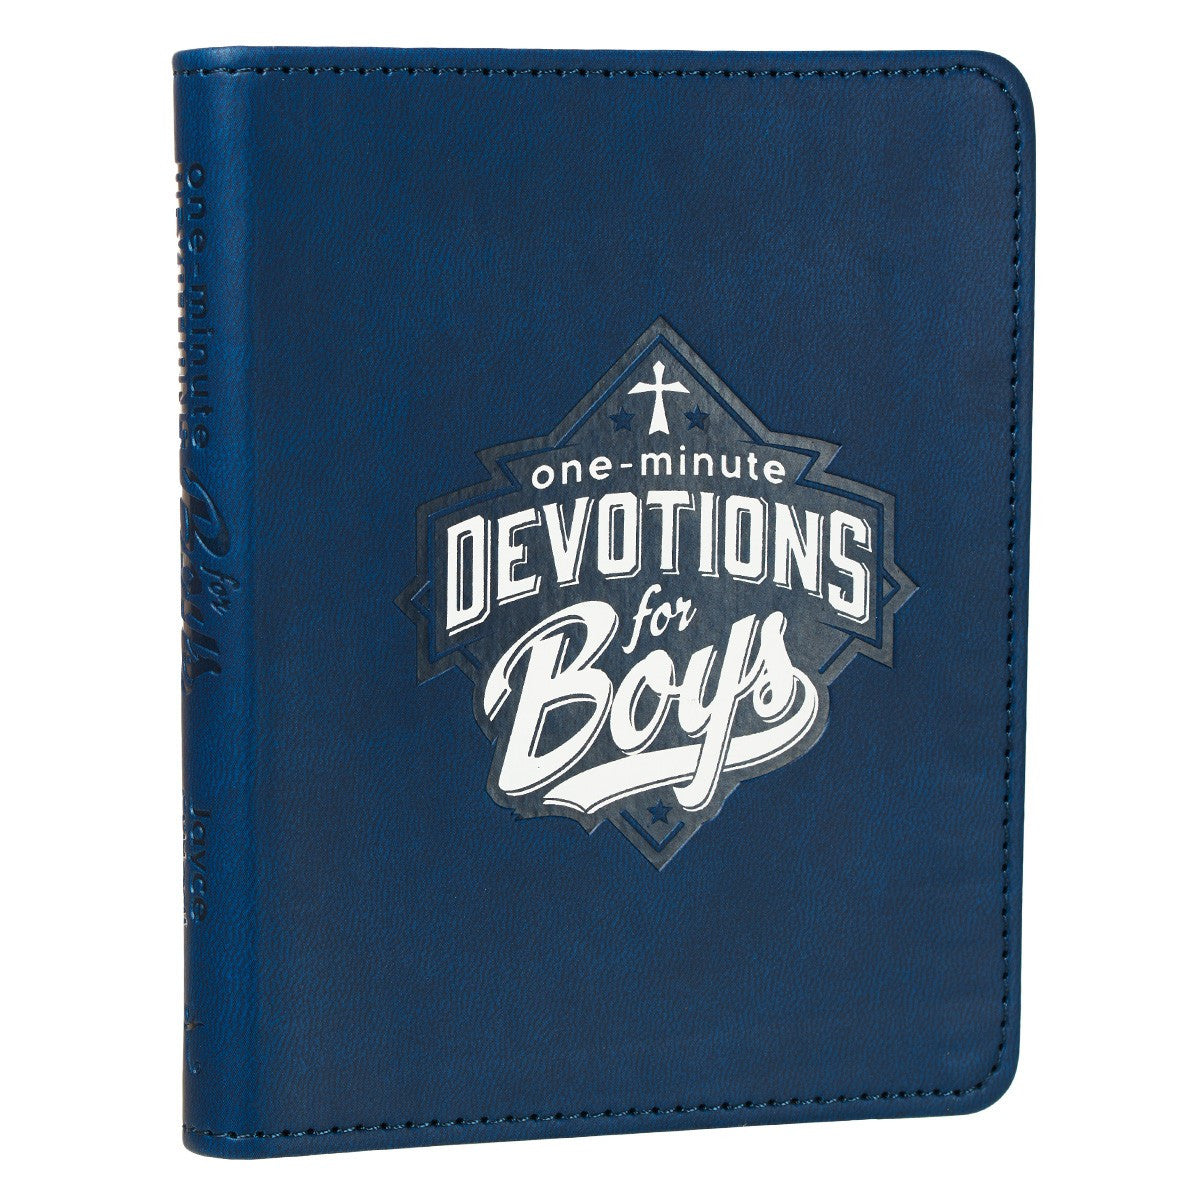 One-Minute Devotions for Boys Blue Faux Leather Devotional